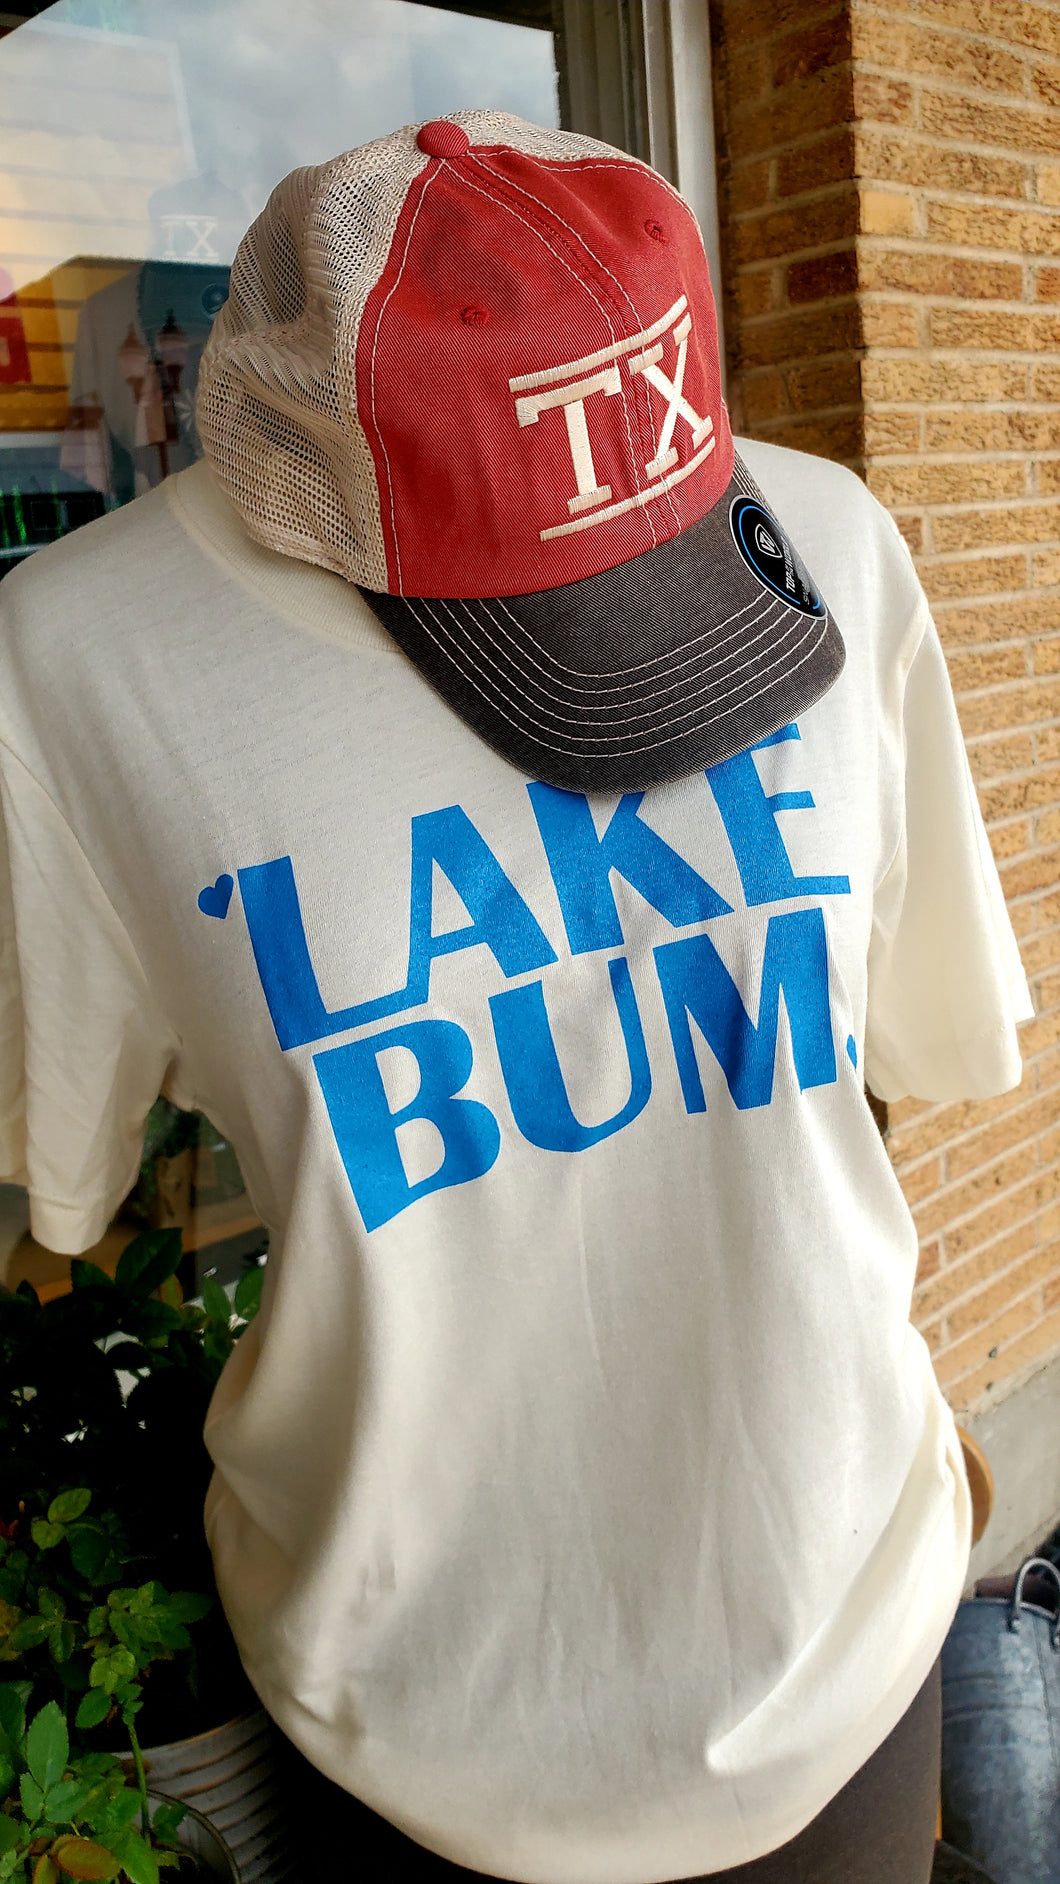 Lake Bum Tee